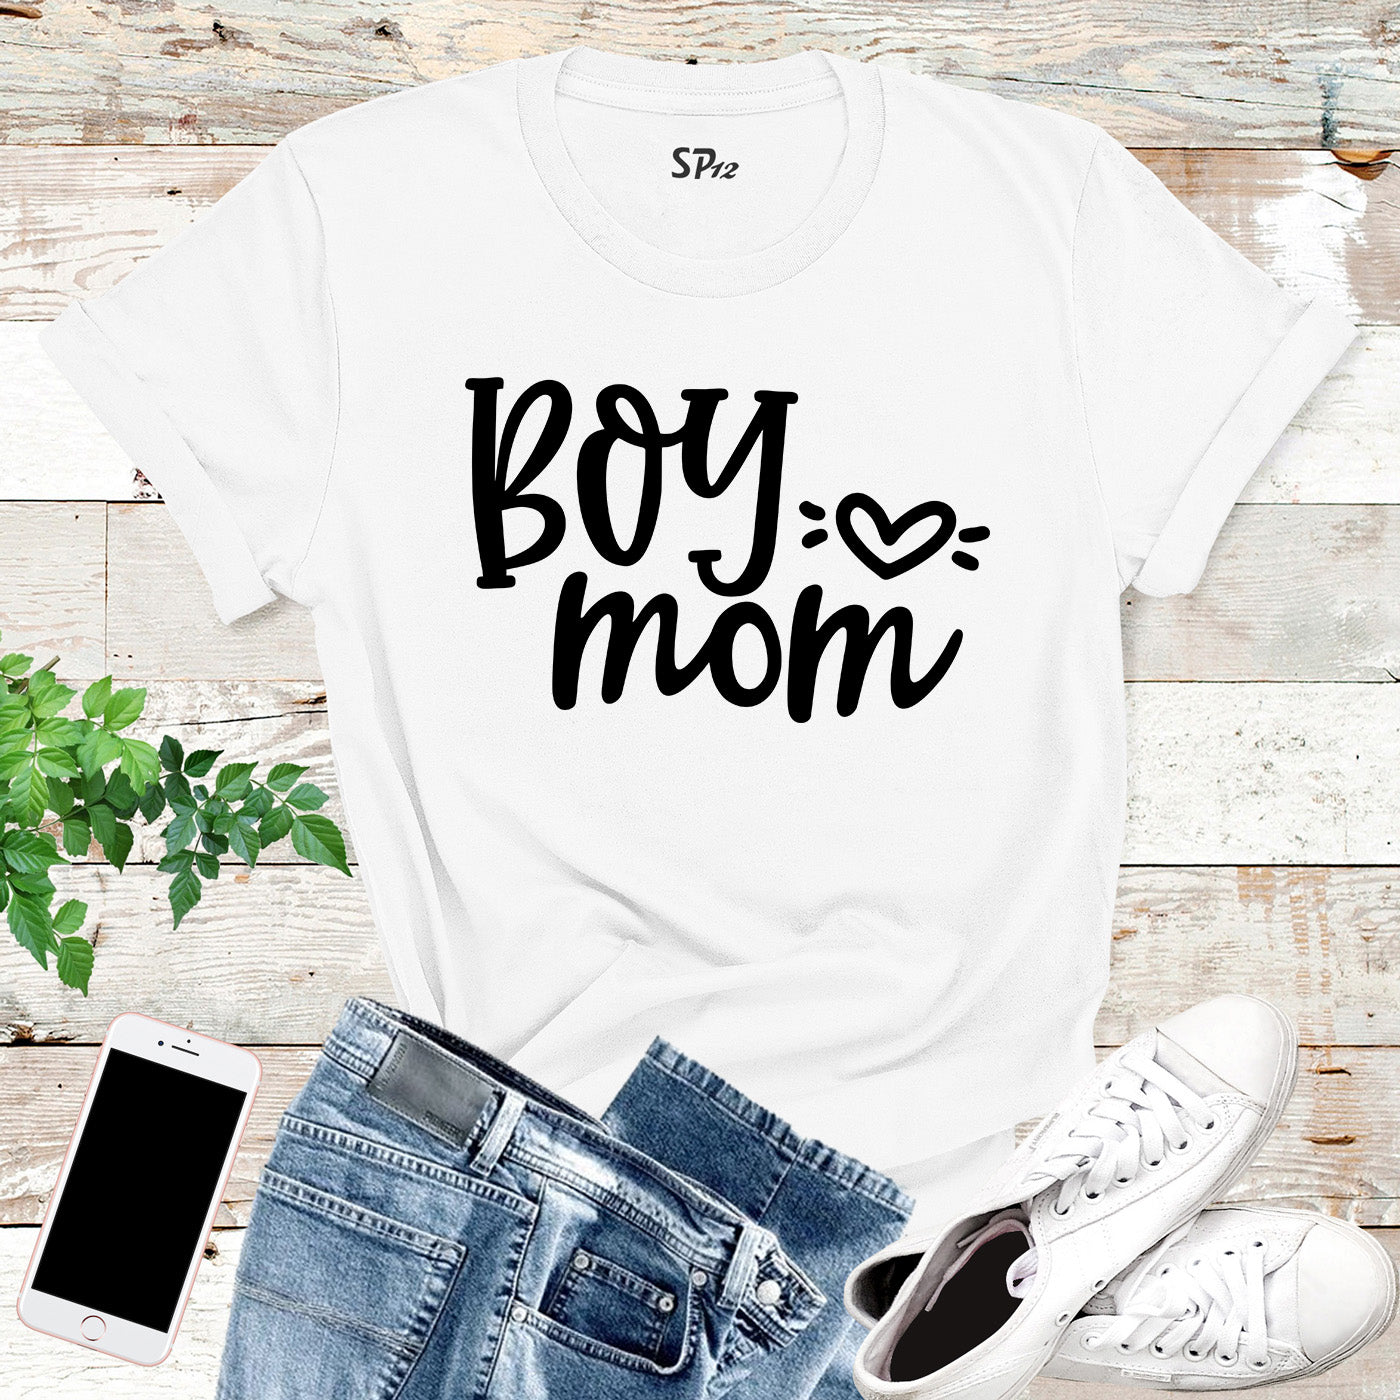 Boymom Gift Guide - Gift ideas for moms of boys - Mom vs the Boys